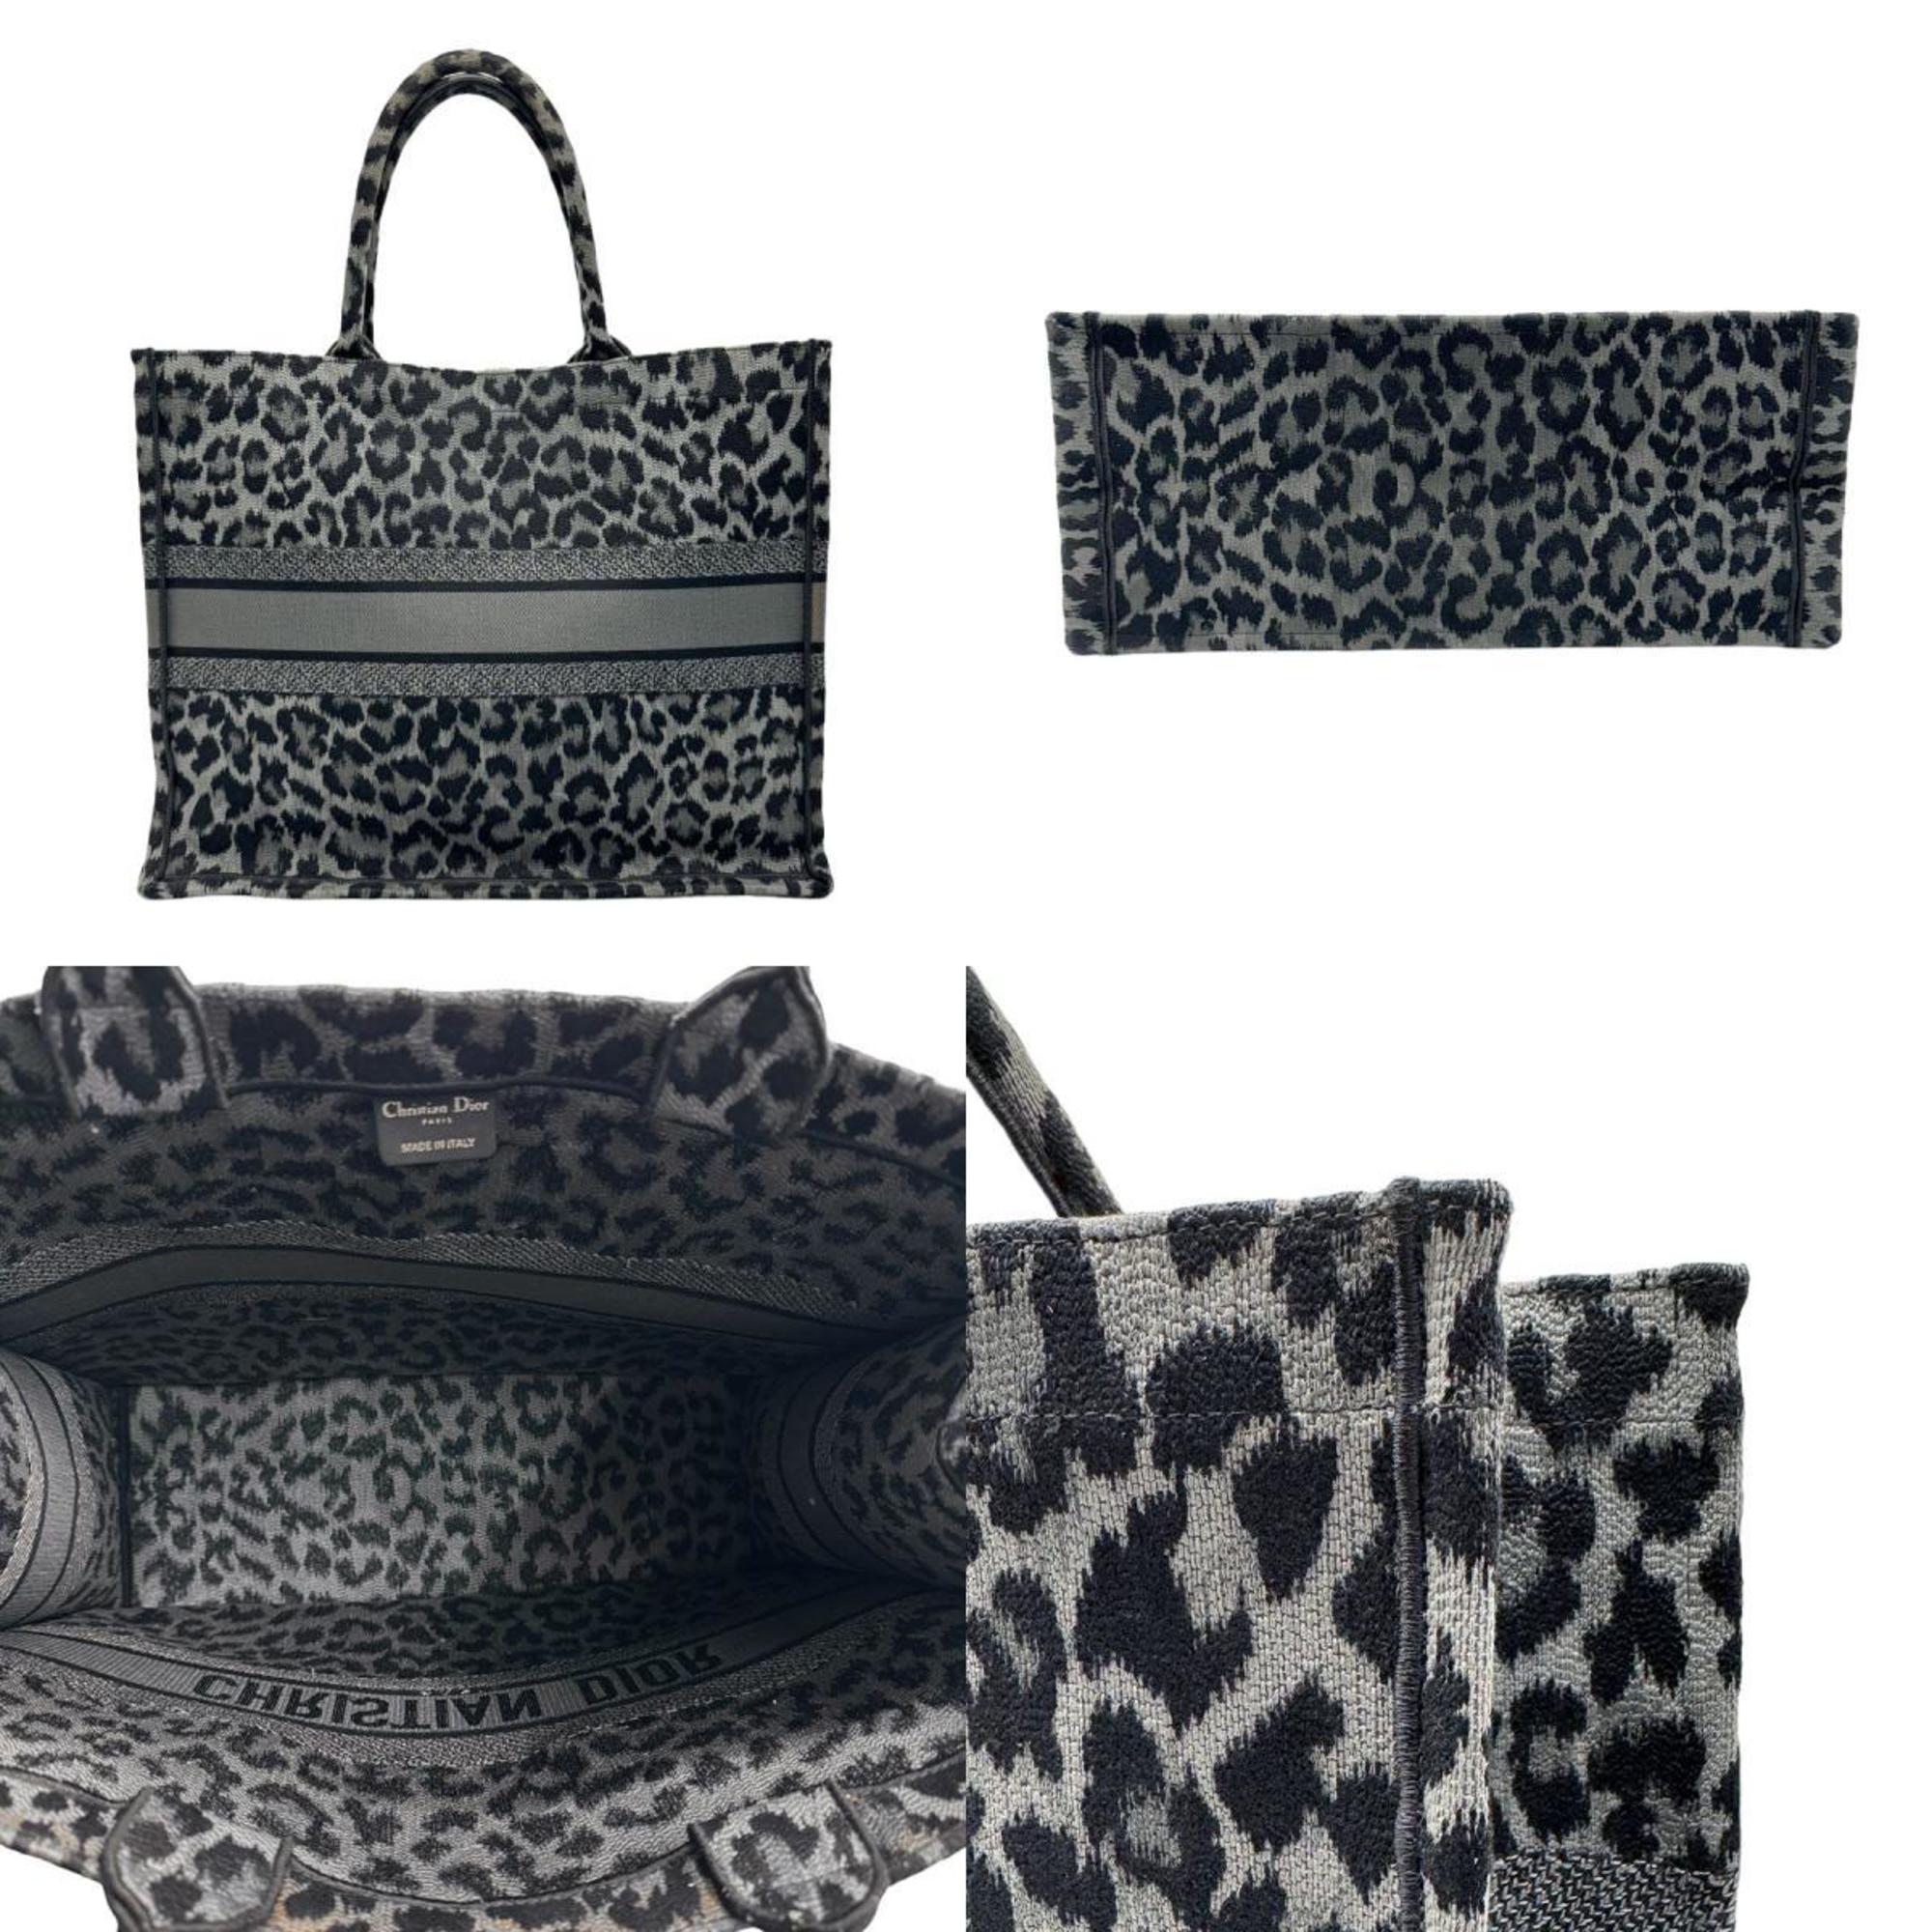 Christian Dior Handbag Book Tote Canvas Grey Black Women's z1445